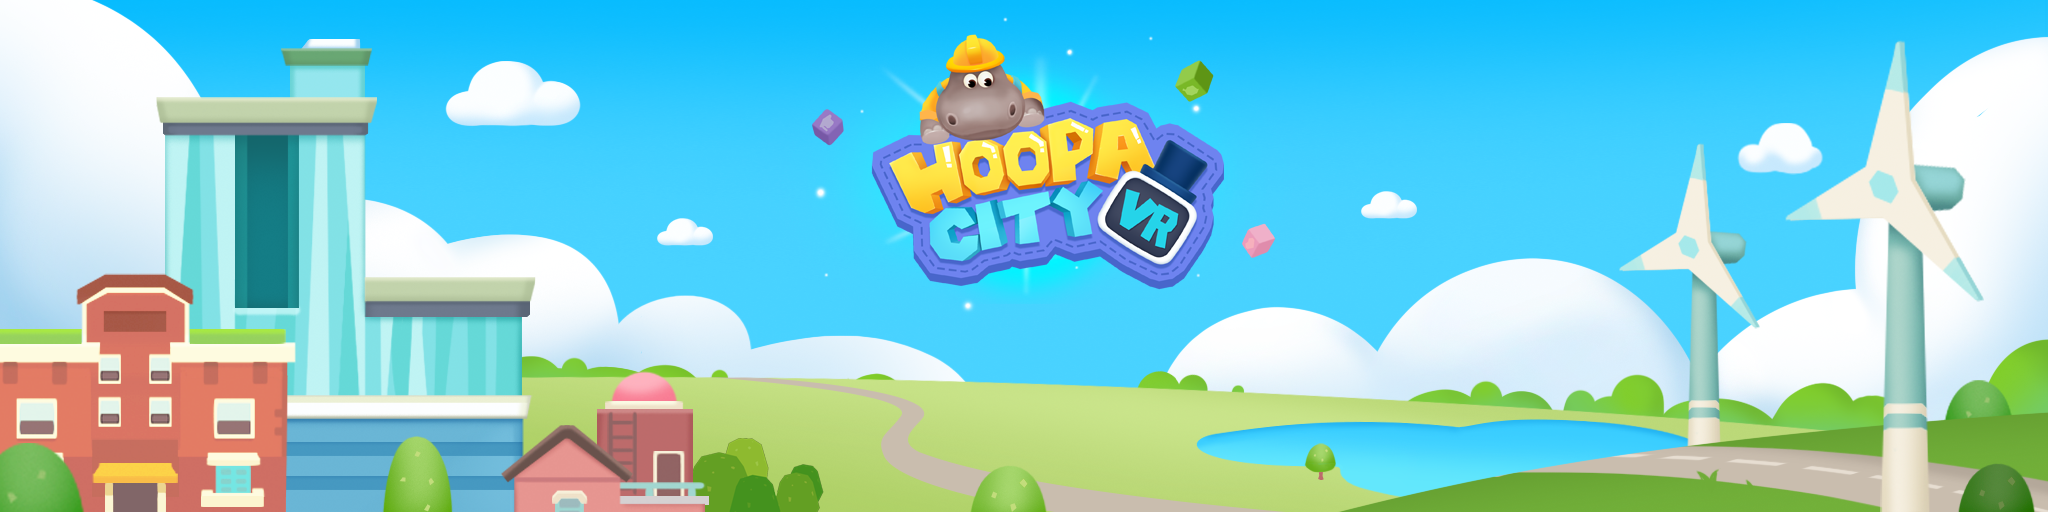 Hoopa City VR